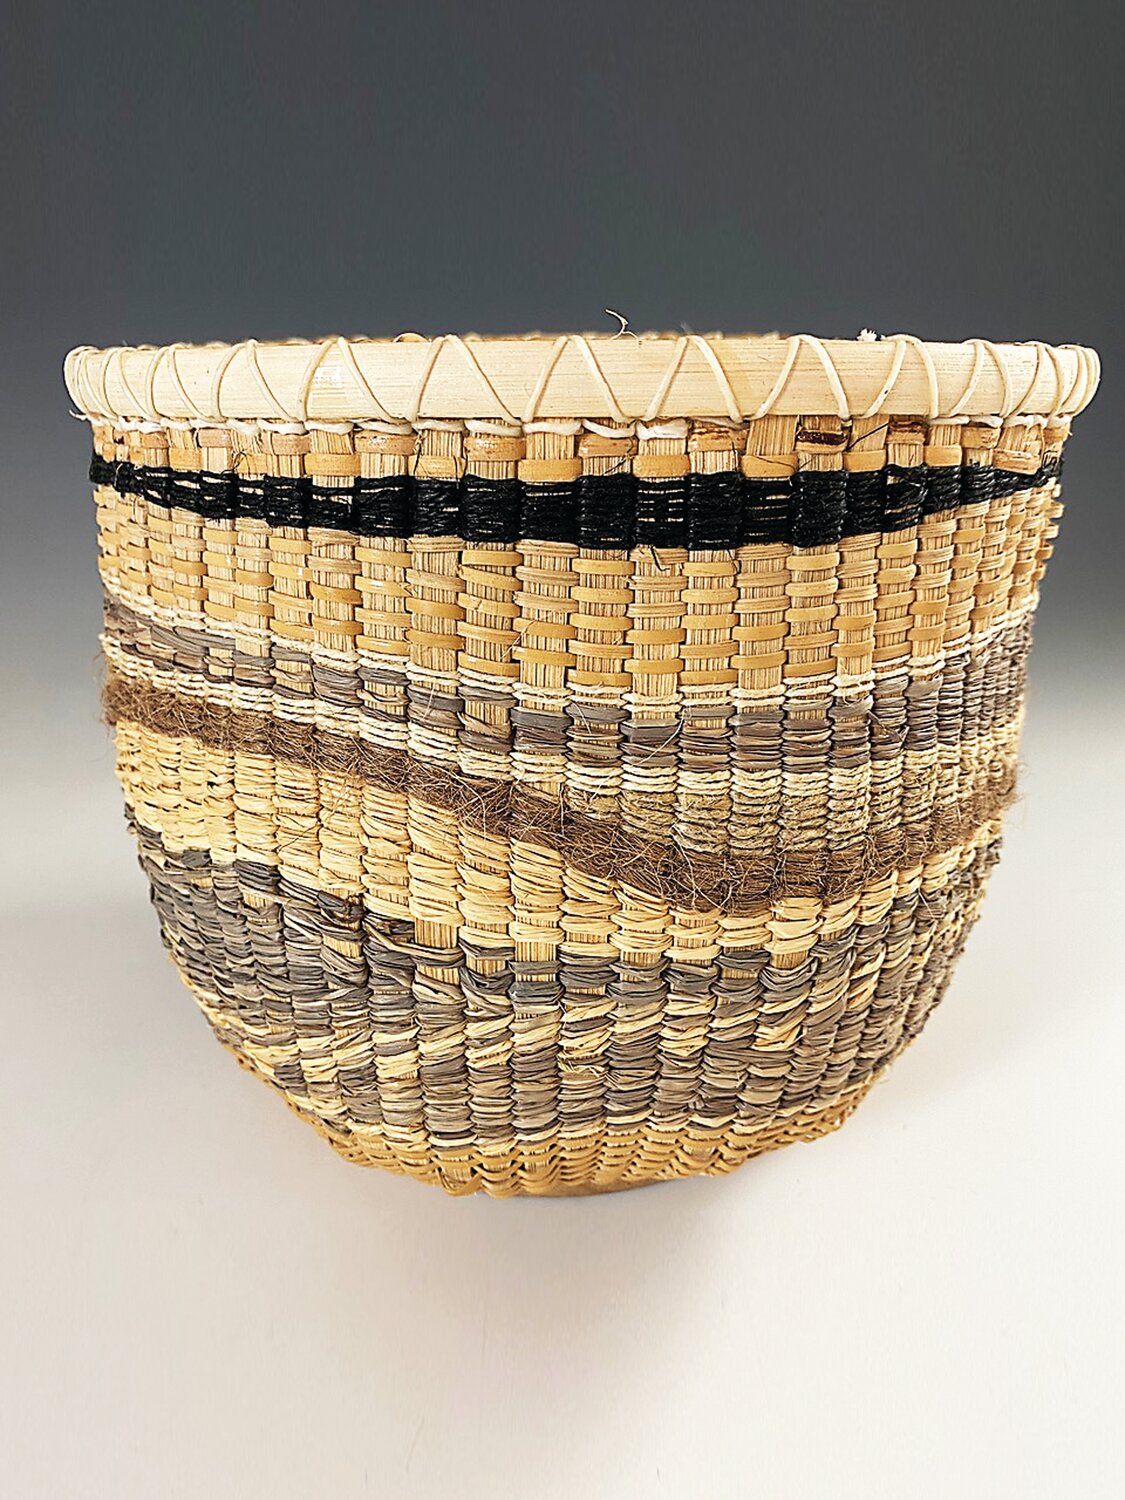 A free-formed basket by Lynn Ebeling.